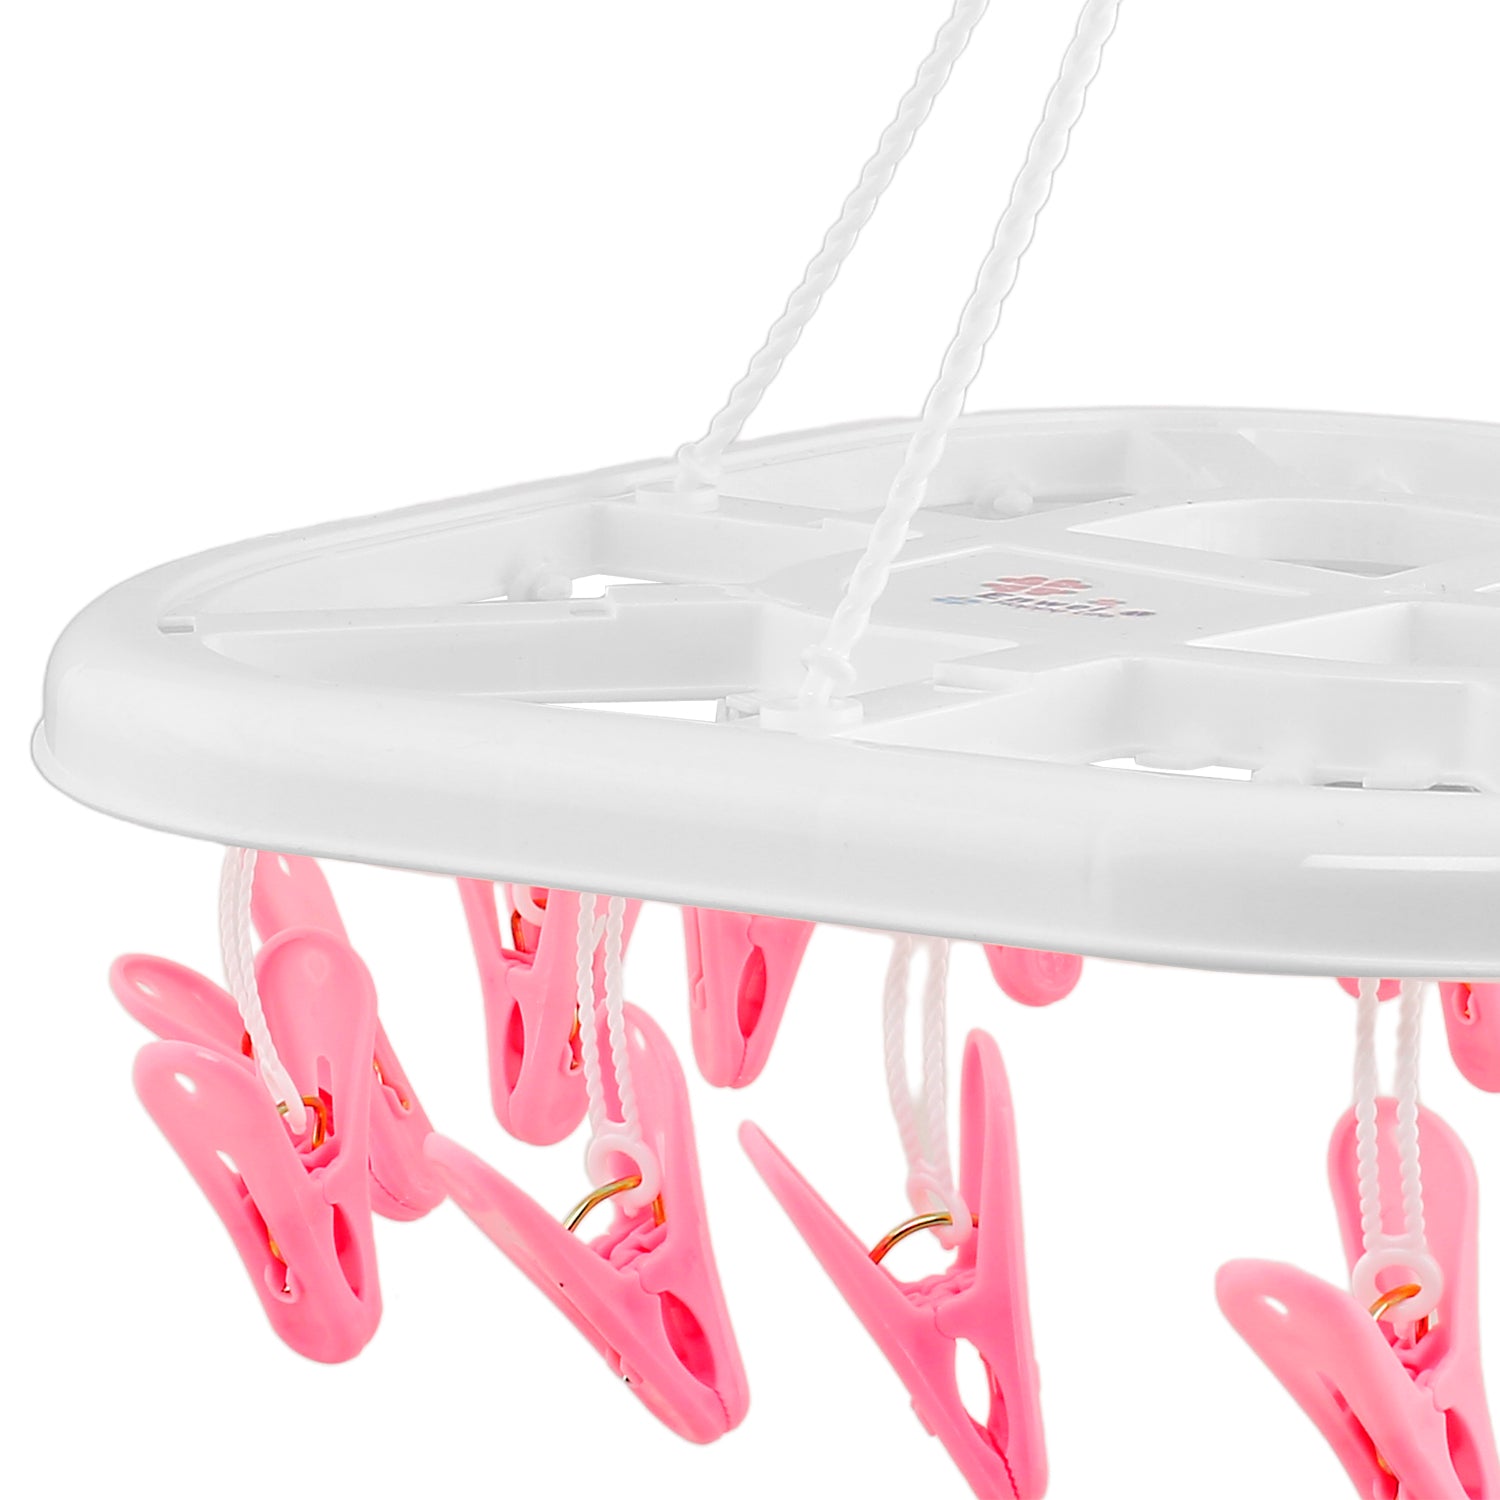 Pink Premium Clip Hanger